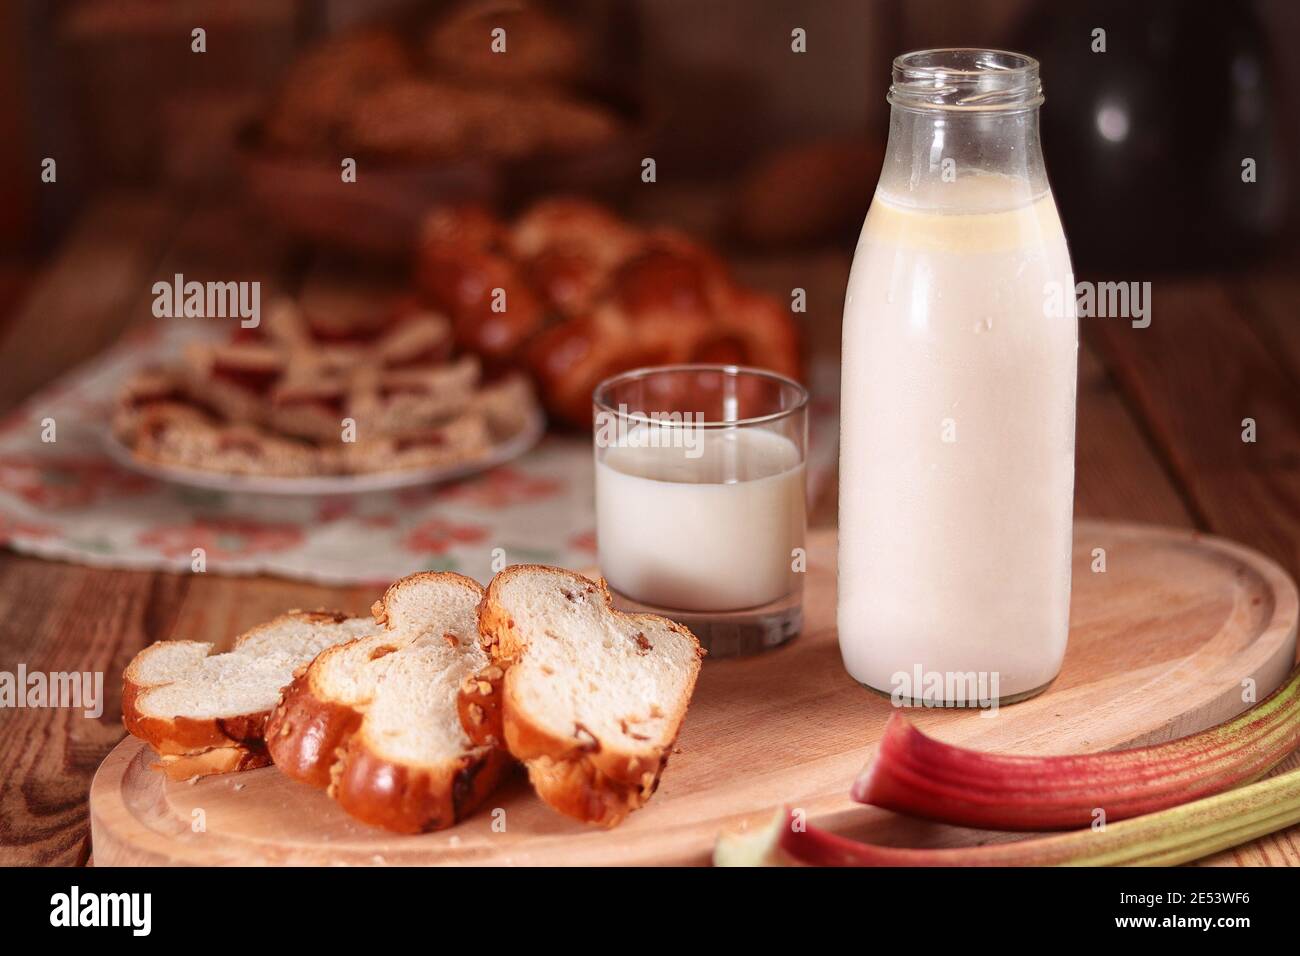 milk drink in a bottle, glass, cake, still life Stock Photo